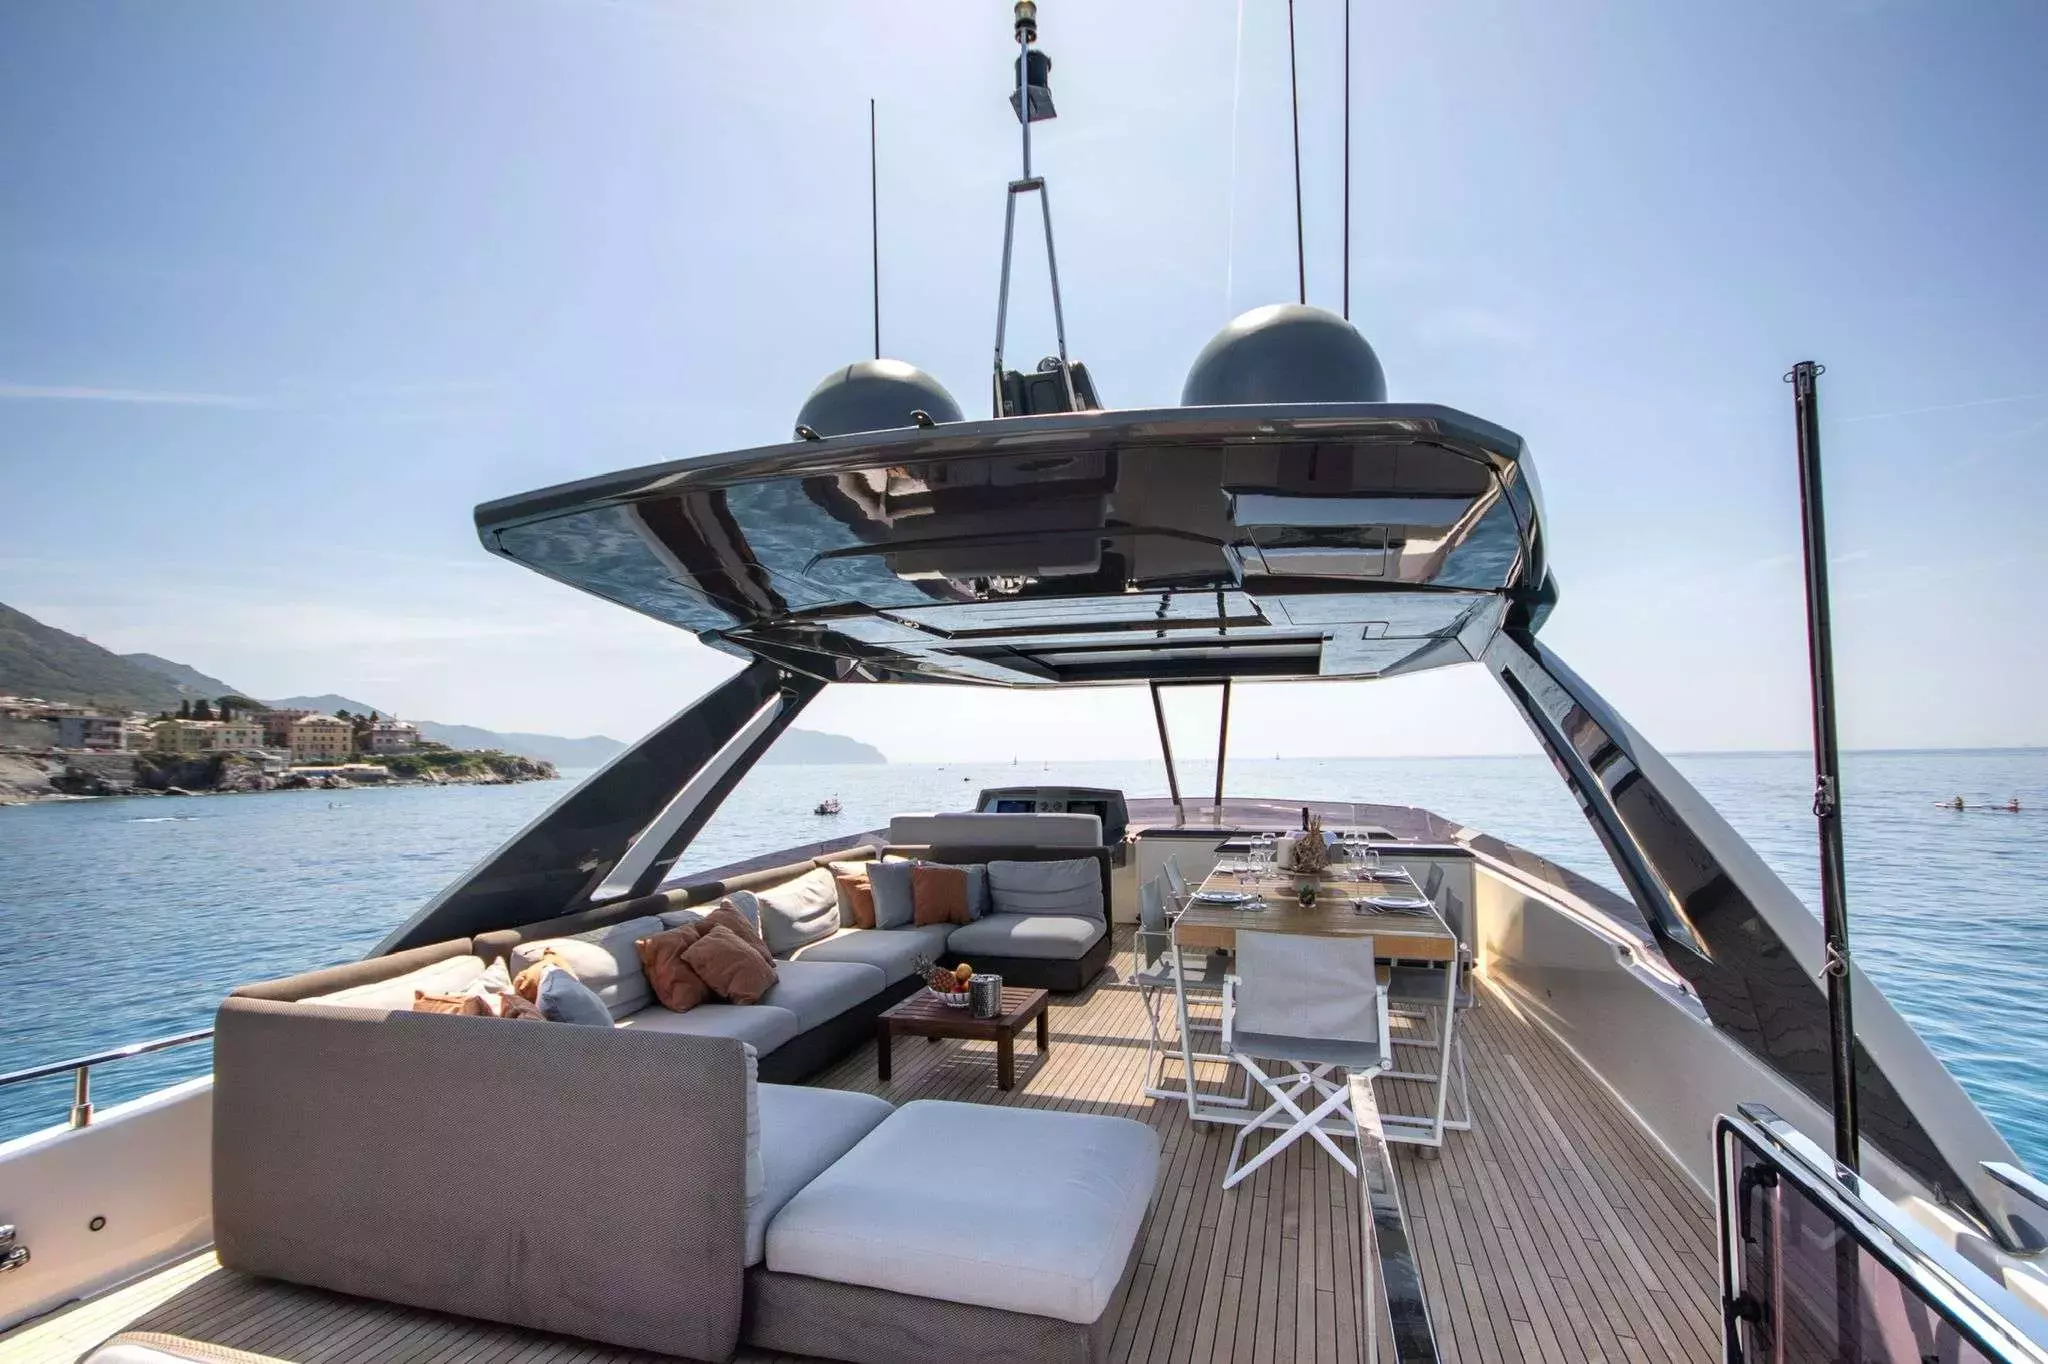 E3 by Ferretti - Special Offer for a private Motor Yacht Charter in La Spezia with a crew